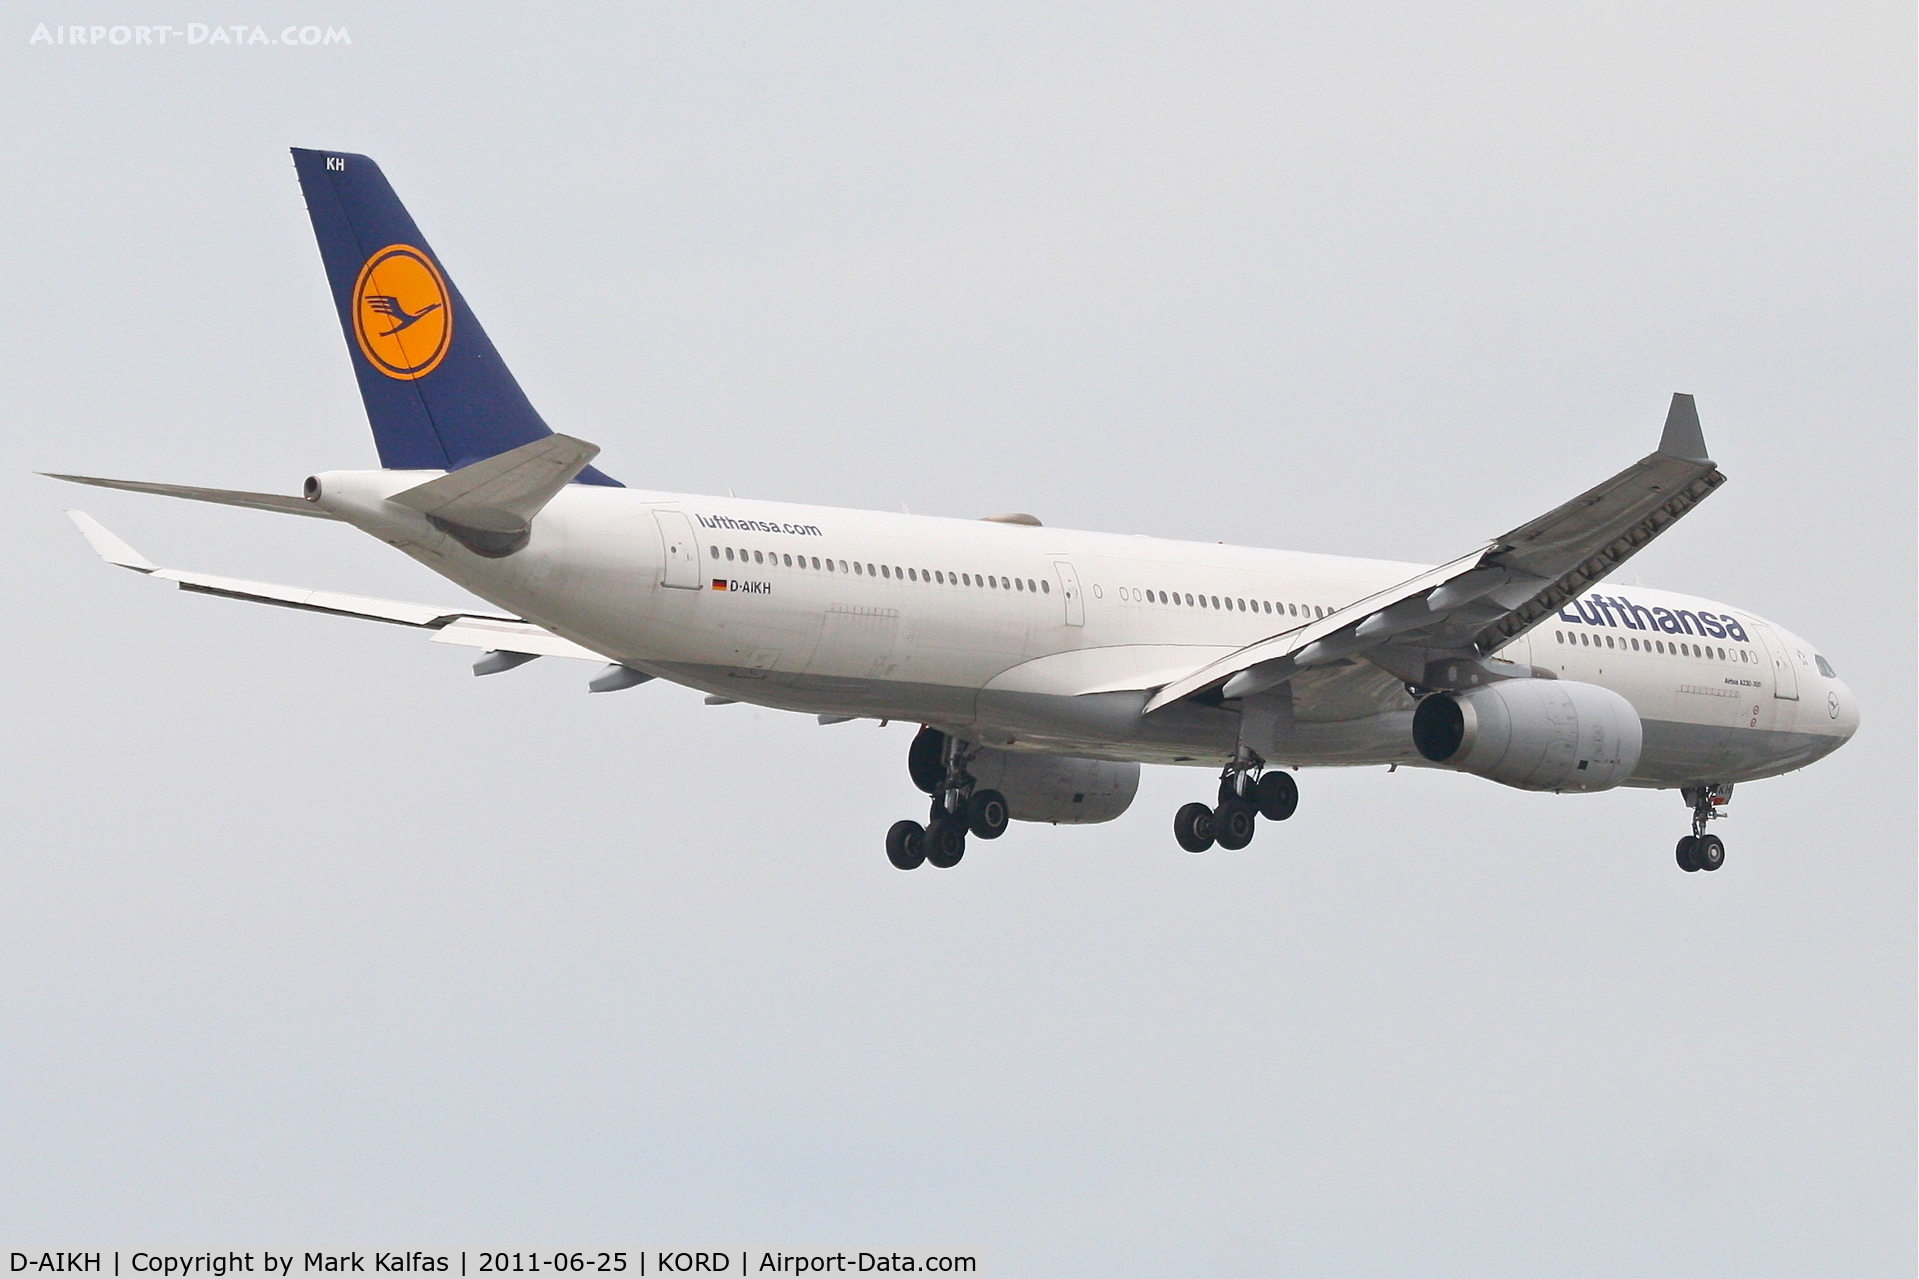 D-AIKH, 2005 Airbus A330-343X C/N 648, Lufthansa Airbus A330-343X, DLH436 arriving from EDDL/Dusseldorf, RWY 10 approach KORD.